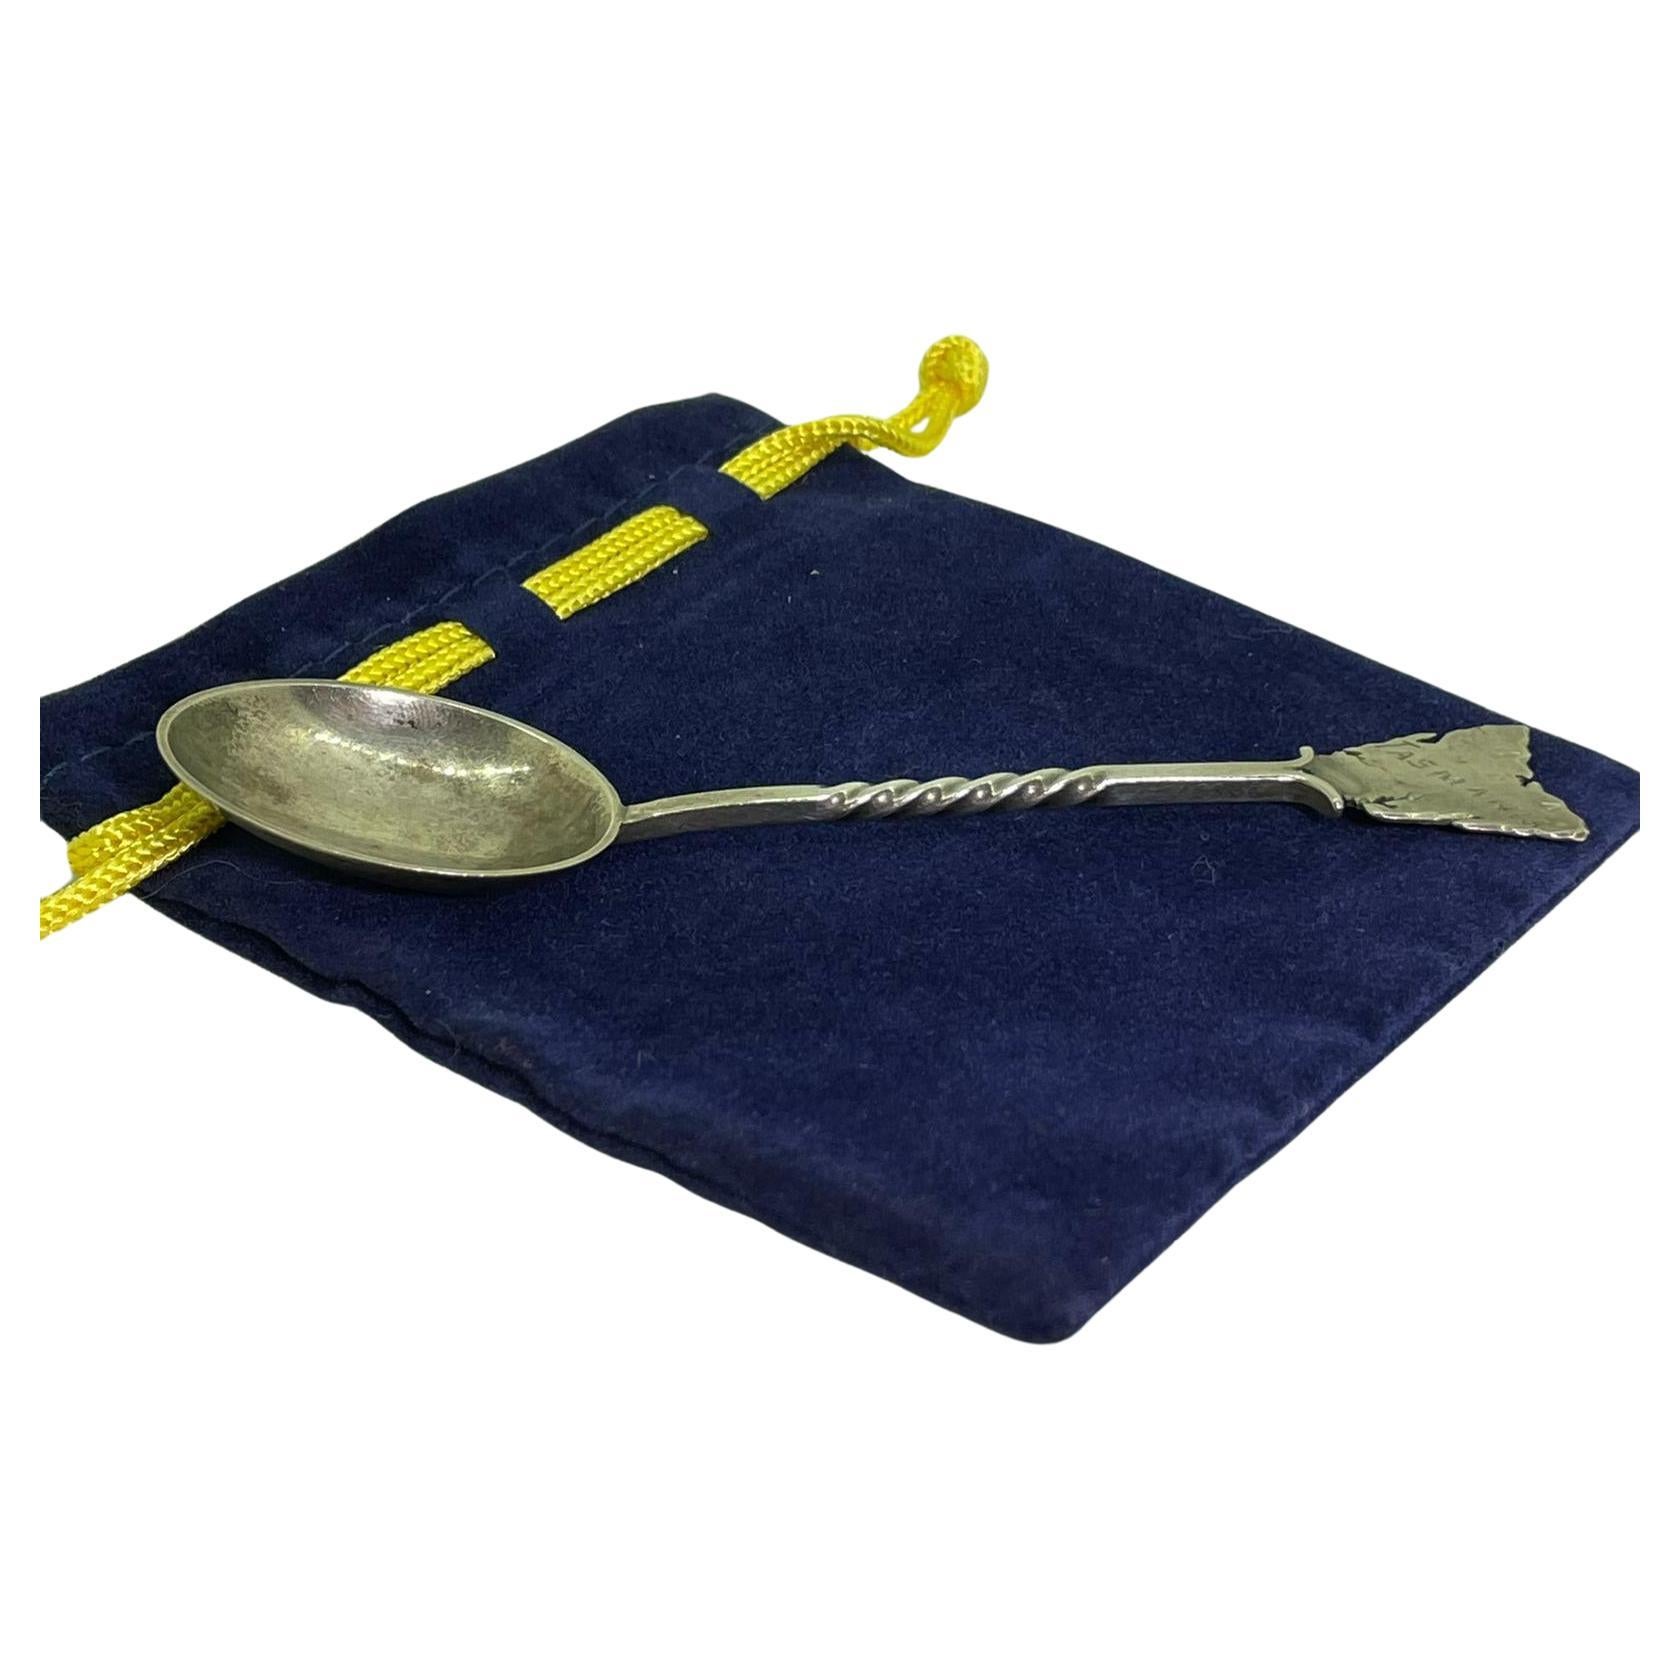 rare souvenir spoons australia